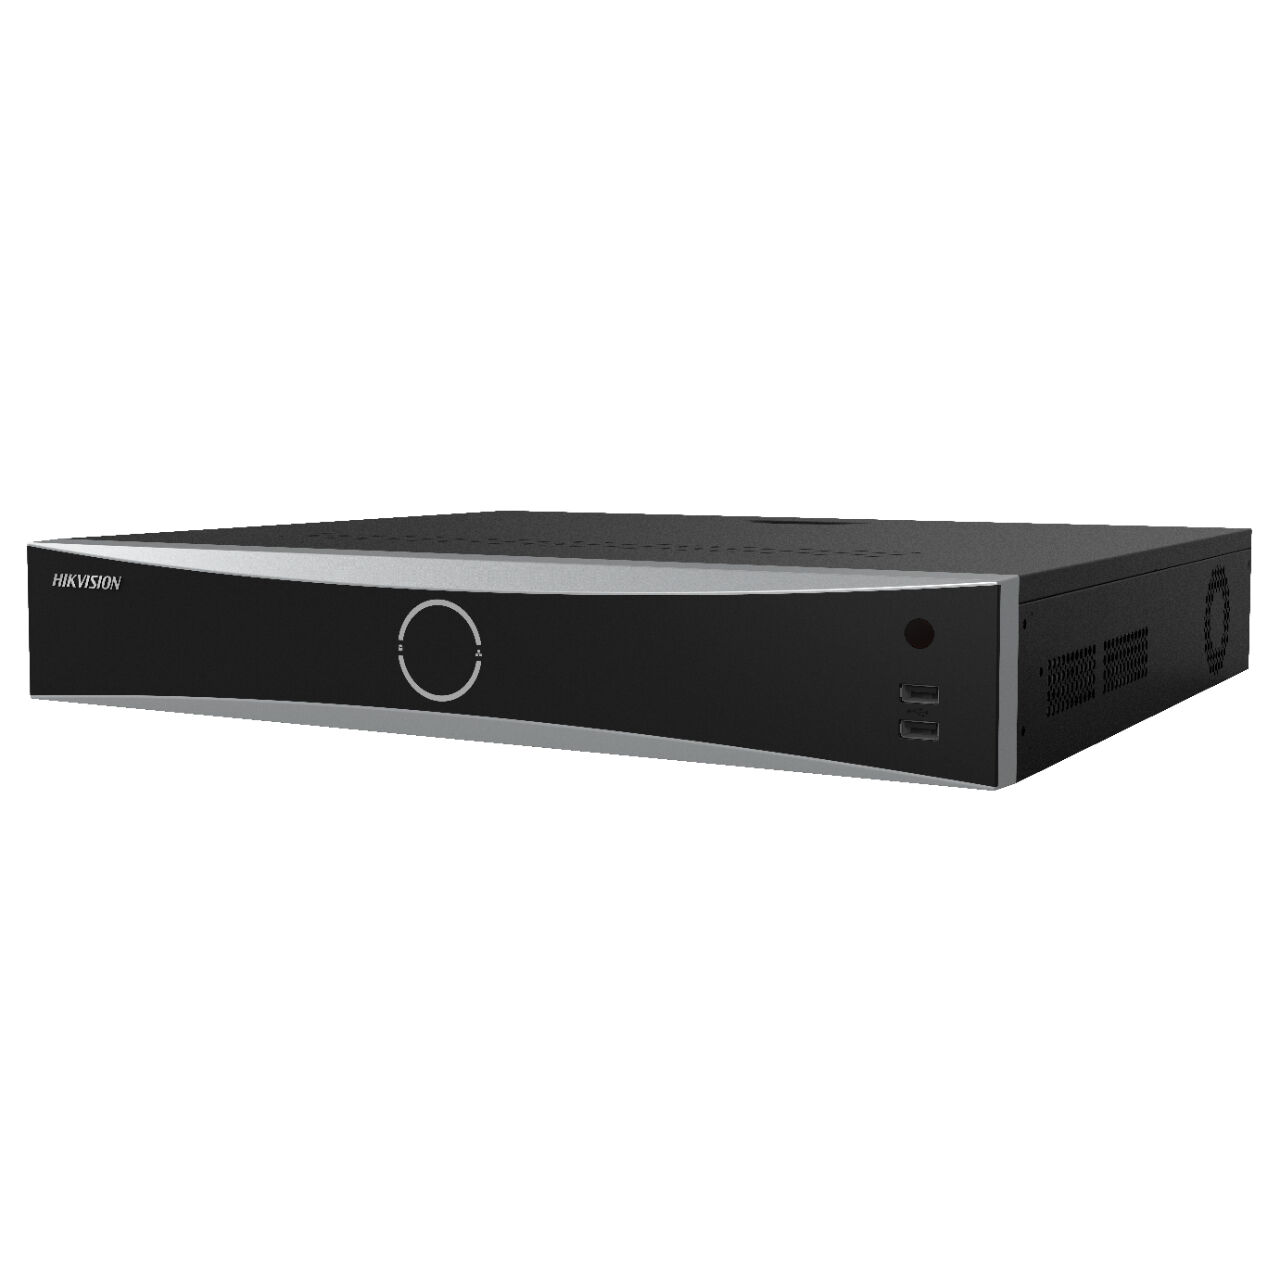 Hikvision DS-7732NXI-K4 Videoregistratore di rete (NVR) 1.5U Nero [DS-7732NXI-K4]